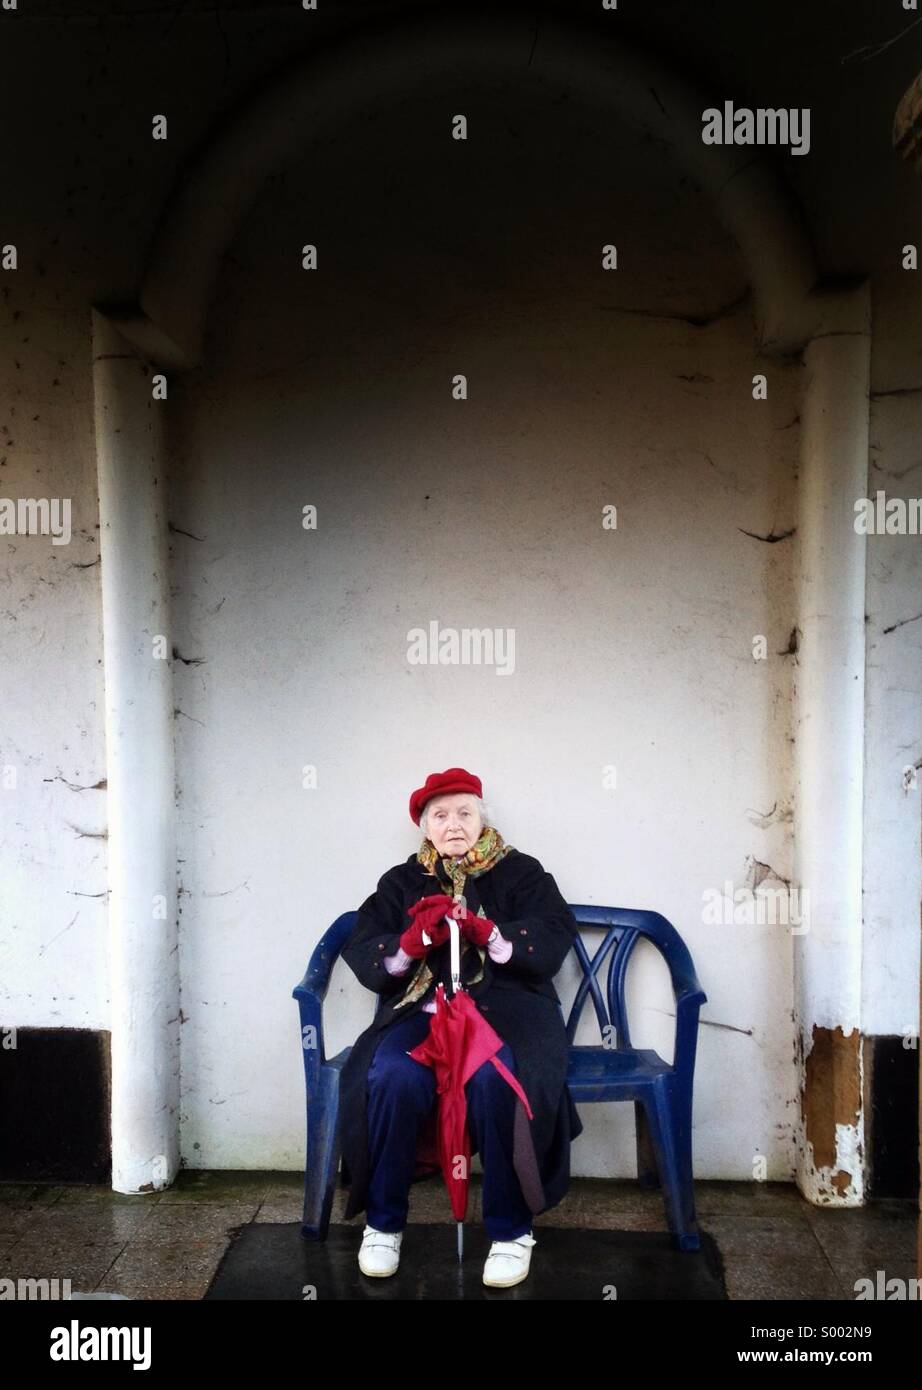 Senior lady, woman aged 80-85 sitting on bench, outdoors Stock Photo